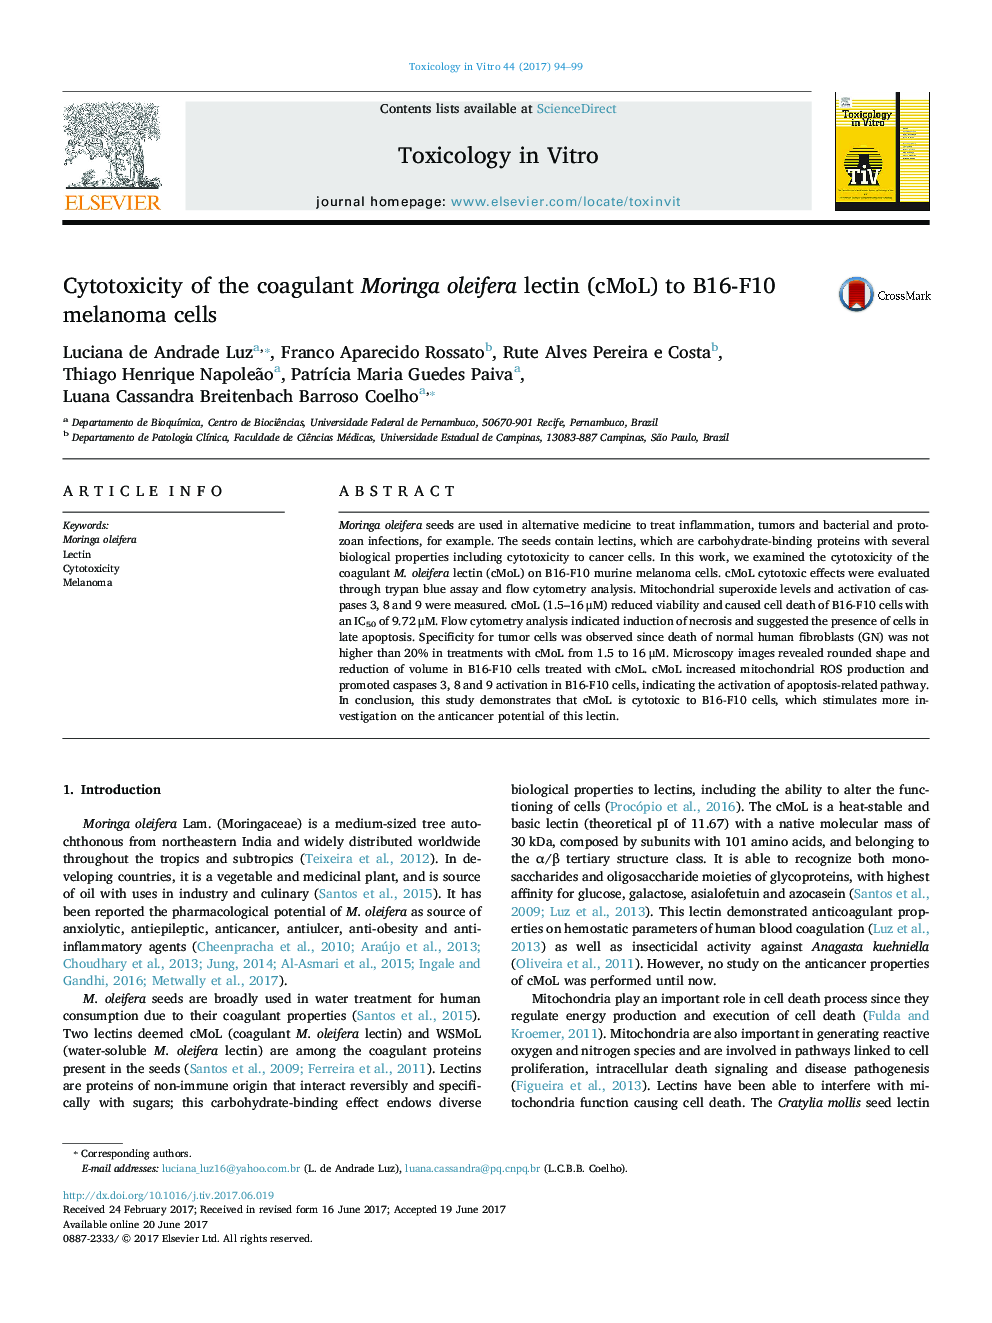 Cytotoxicity of the coagulant Moringa oleifera lectin (cMoL) to B16-F10 melanoma cells